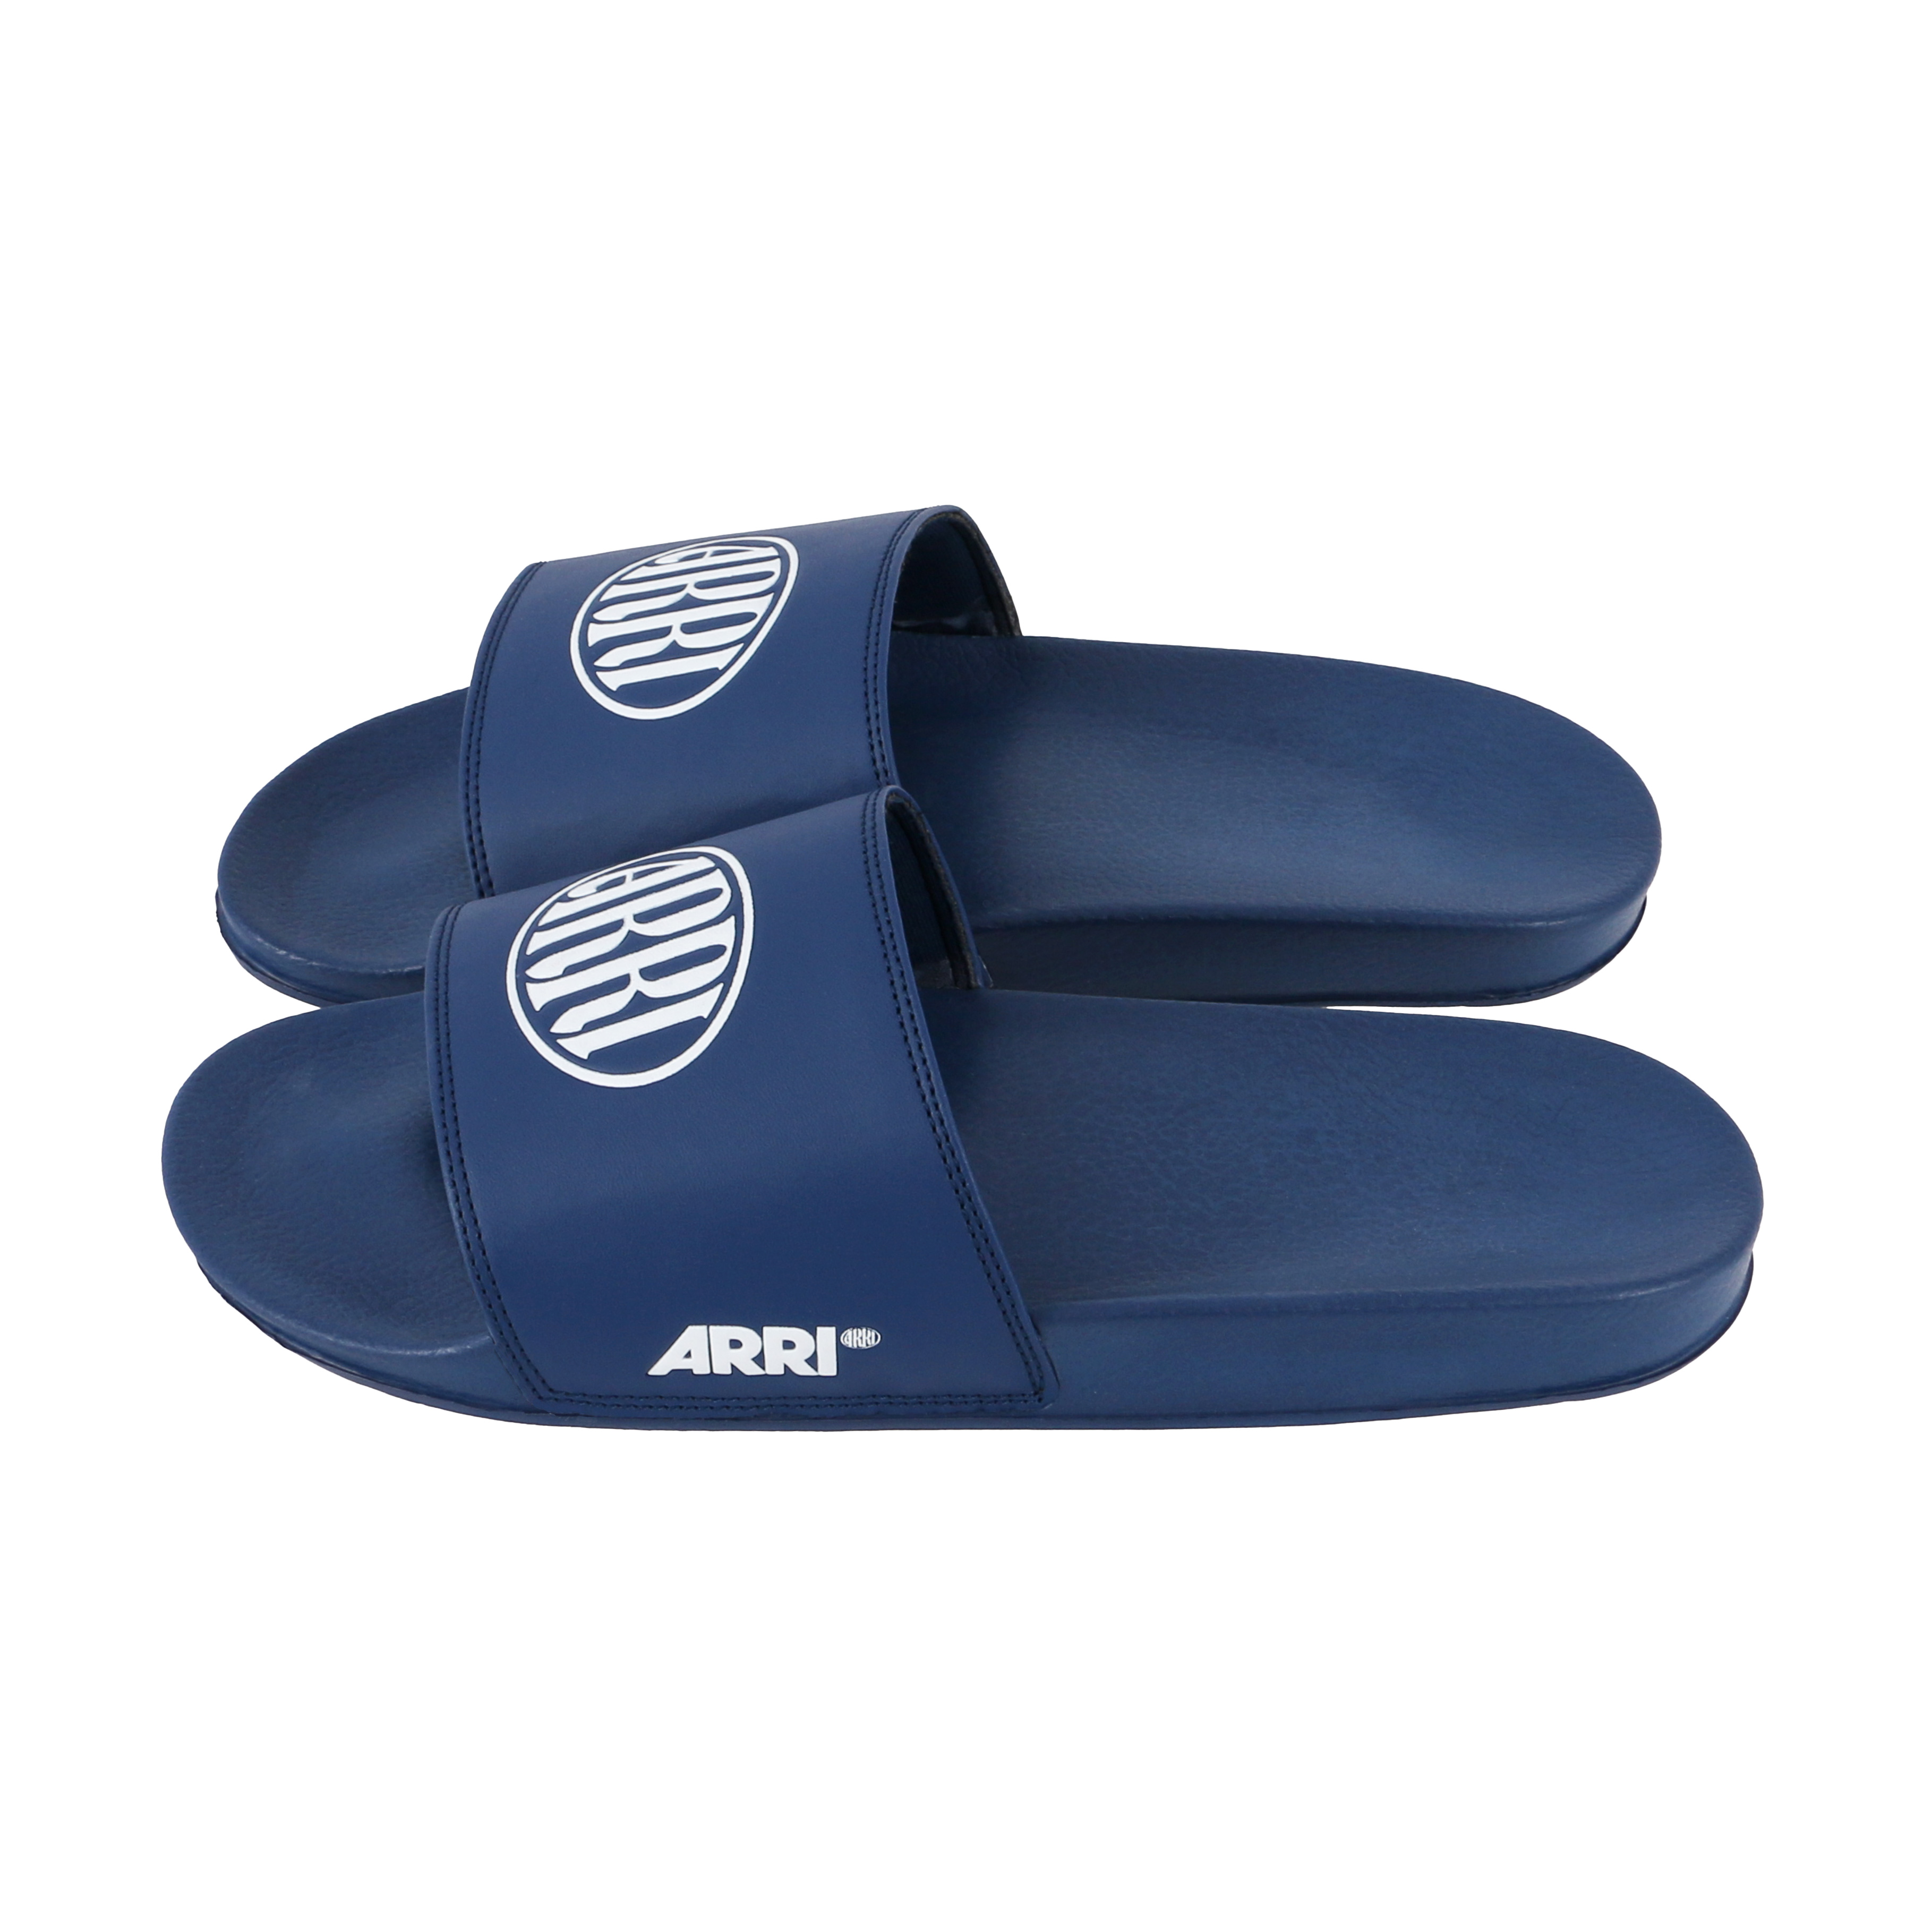 ARRI Slide Sandals